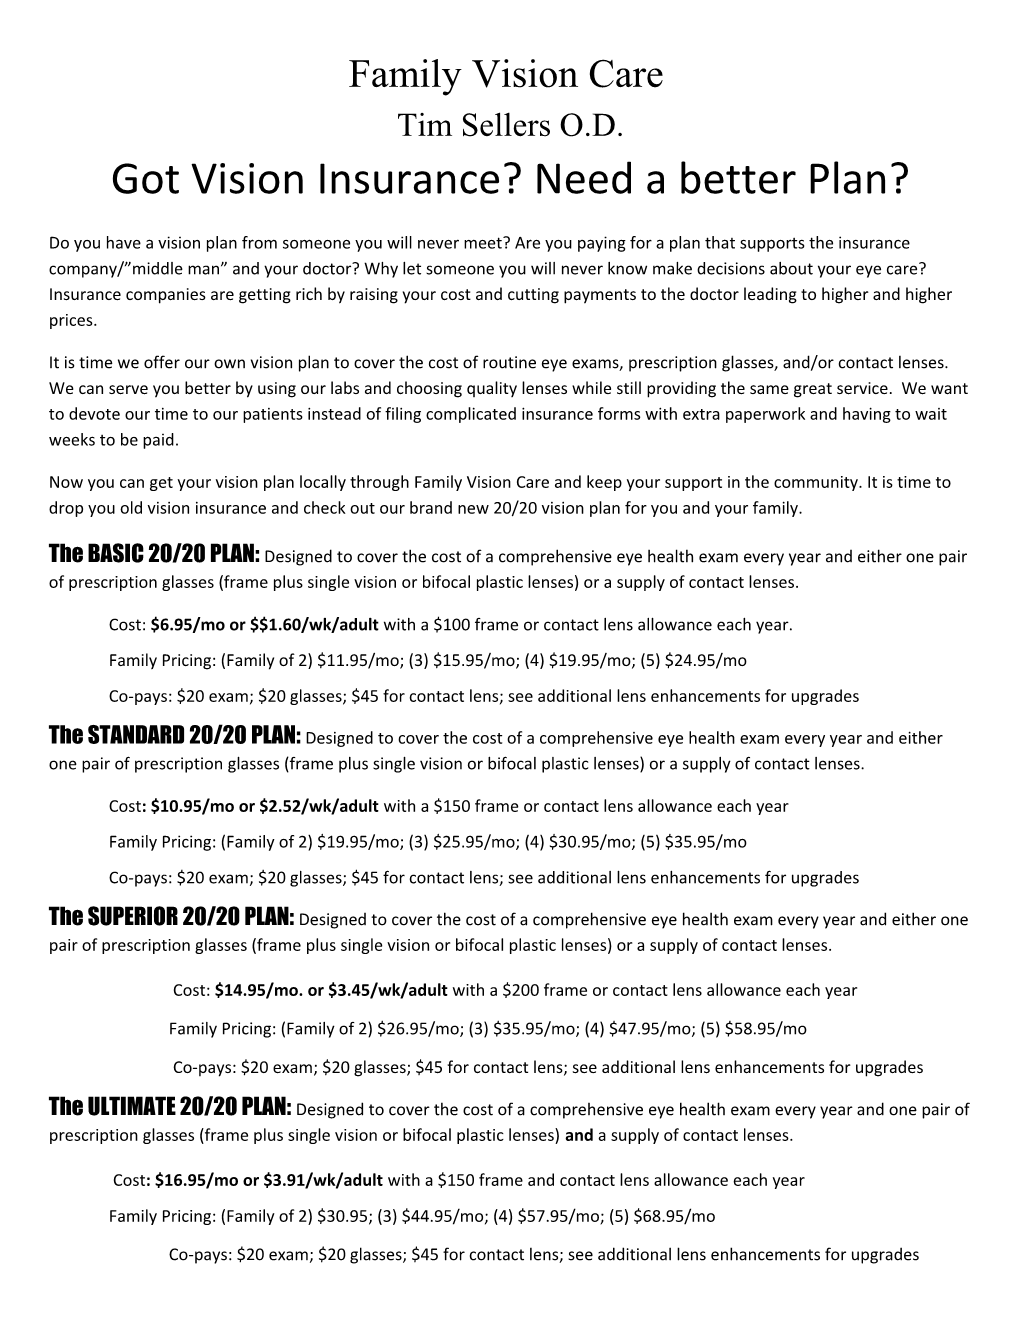 Got Vision Insurance? Need a Better Plan?